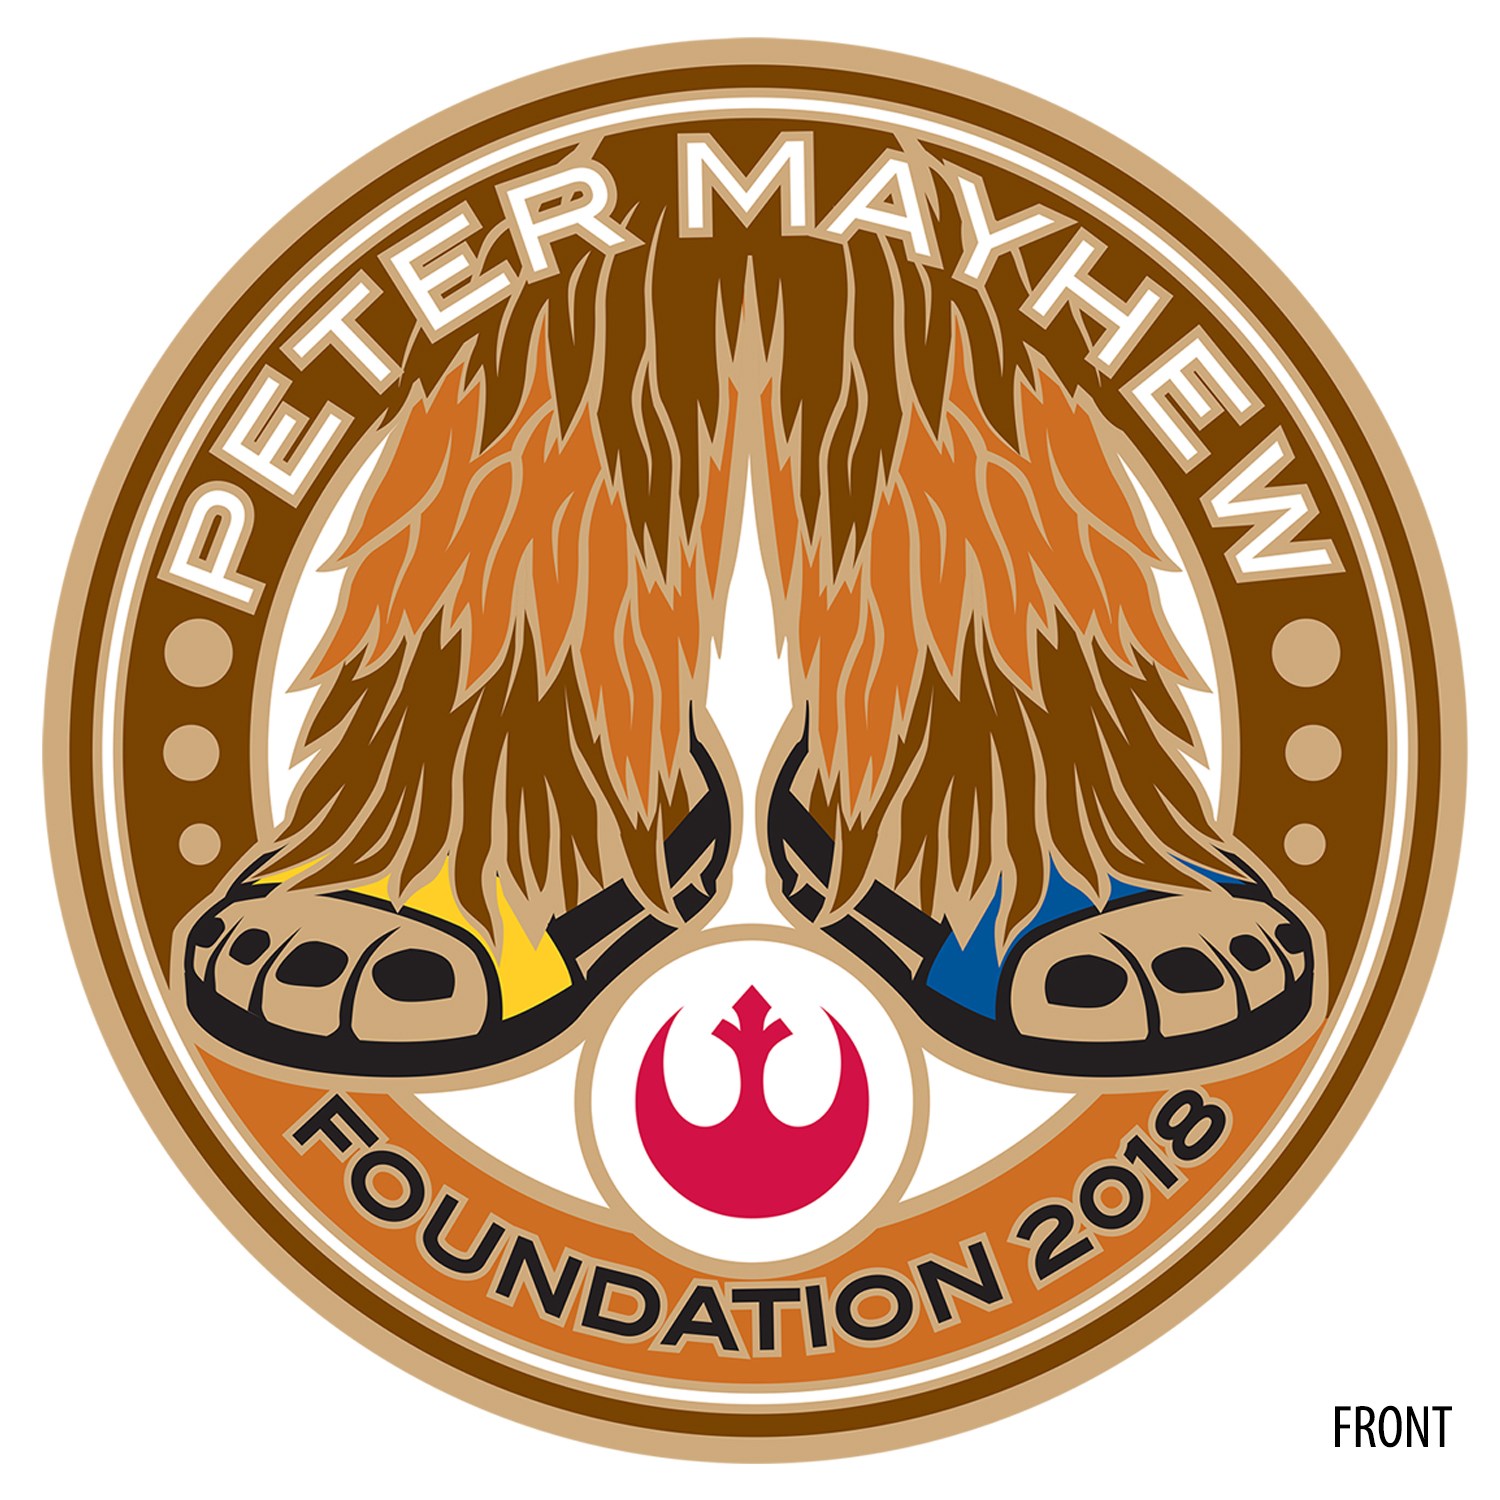 Peter Mahyew Fondation Coin venezuela